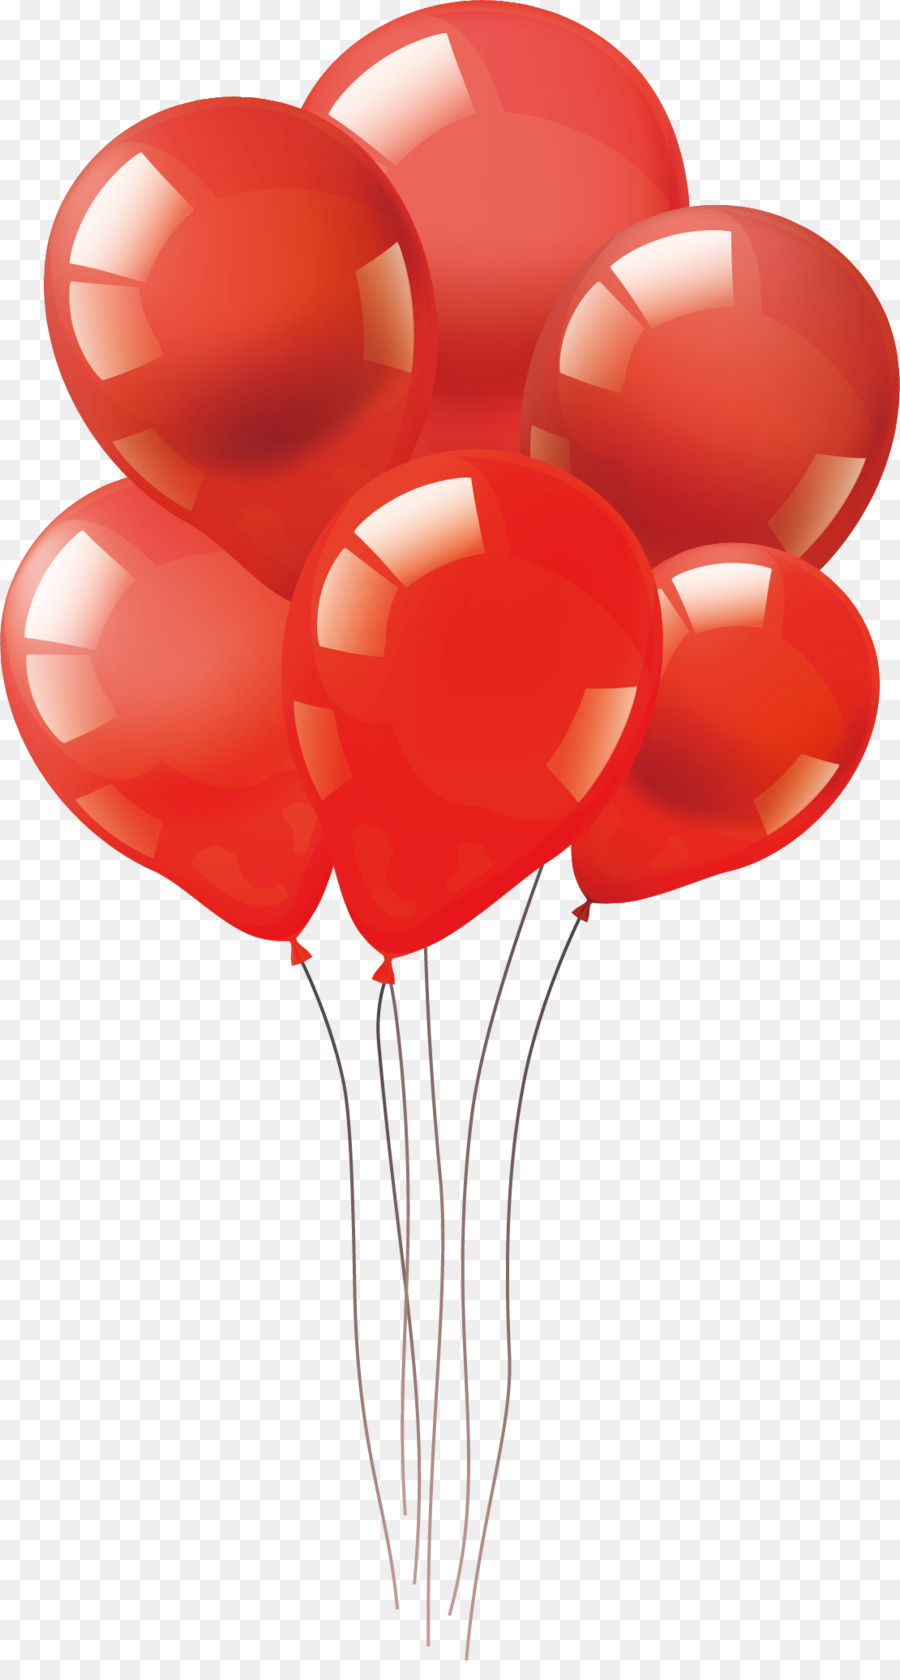 Balloon Clip art - balloon png download - 4162*8000 - Free Transparent ...